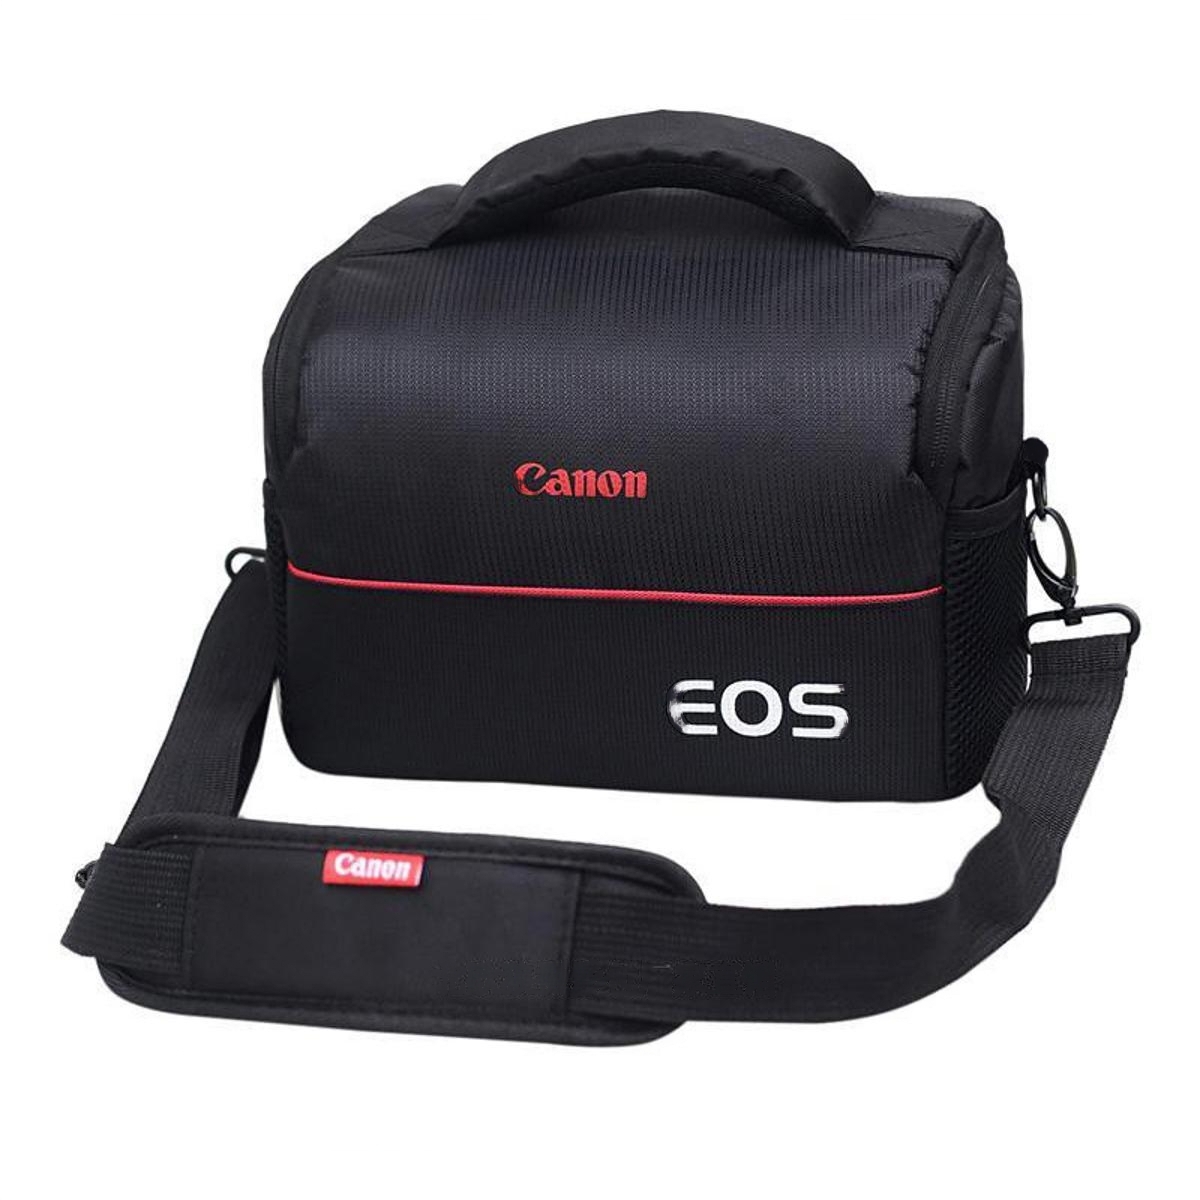 Camera Bag Case For Canon DSLR - Black